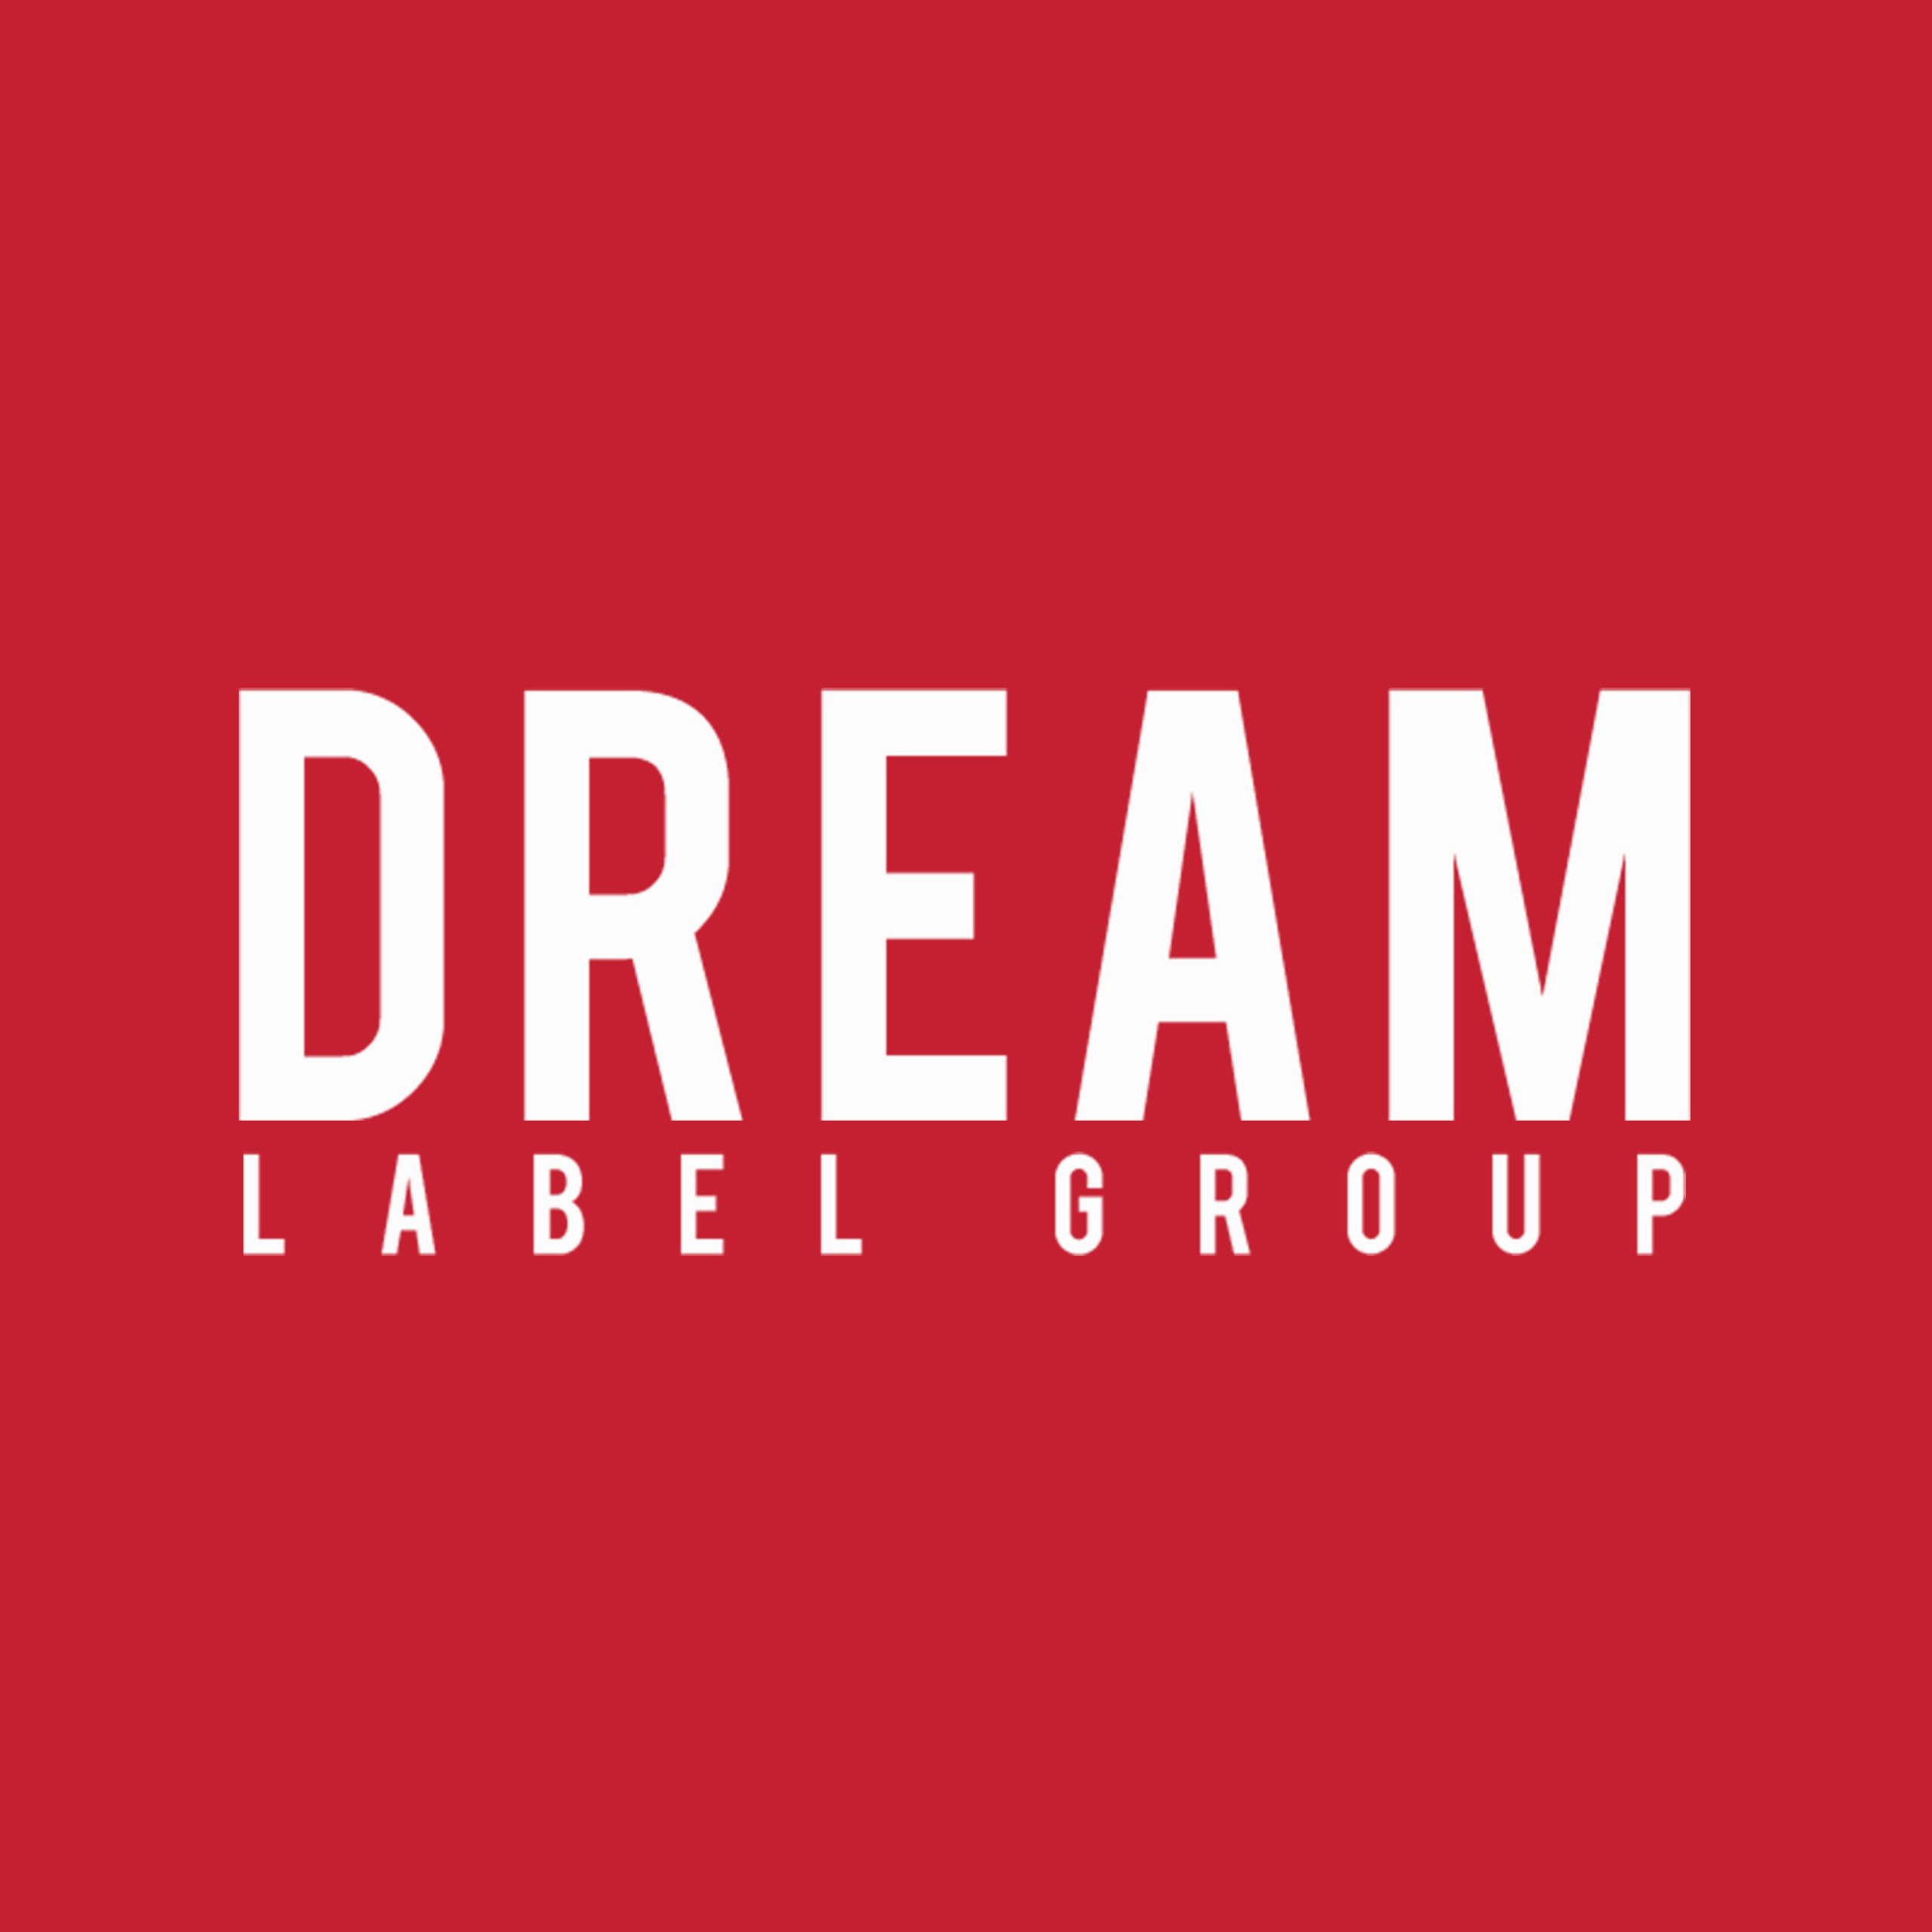 dream-label-group_large-format-logo